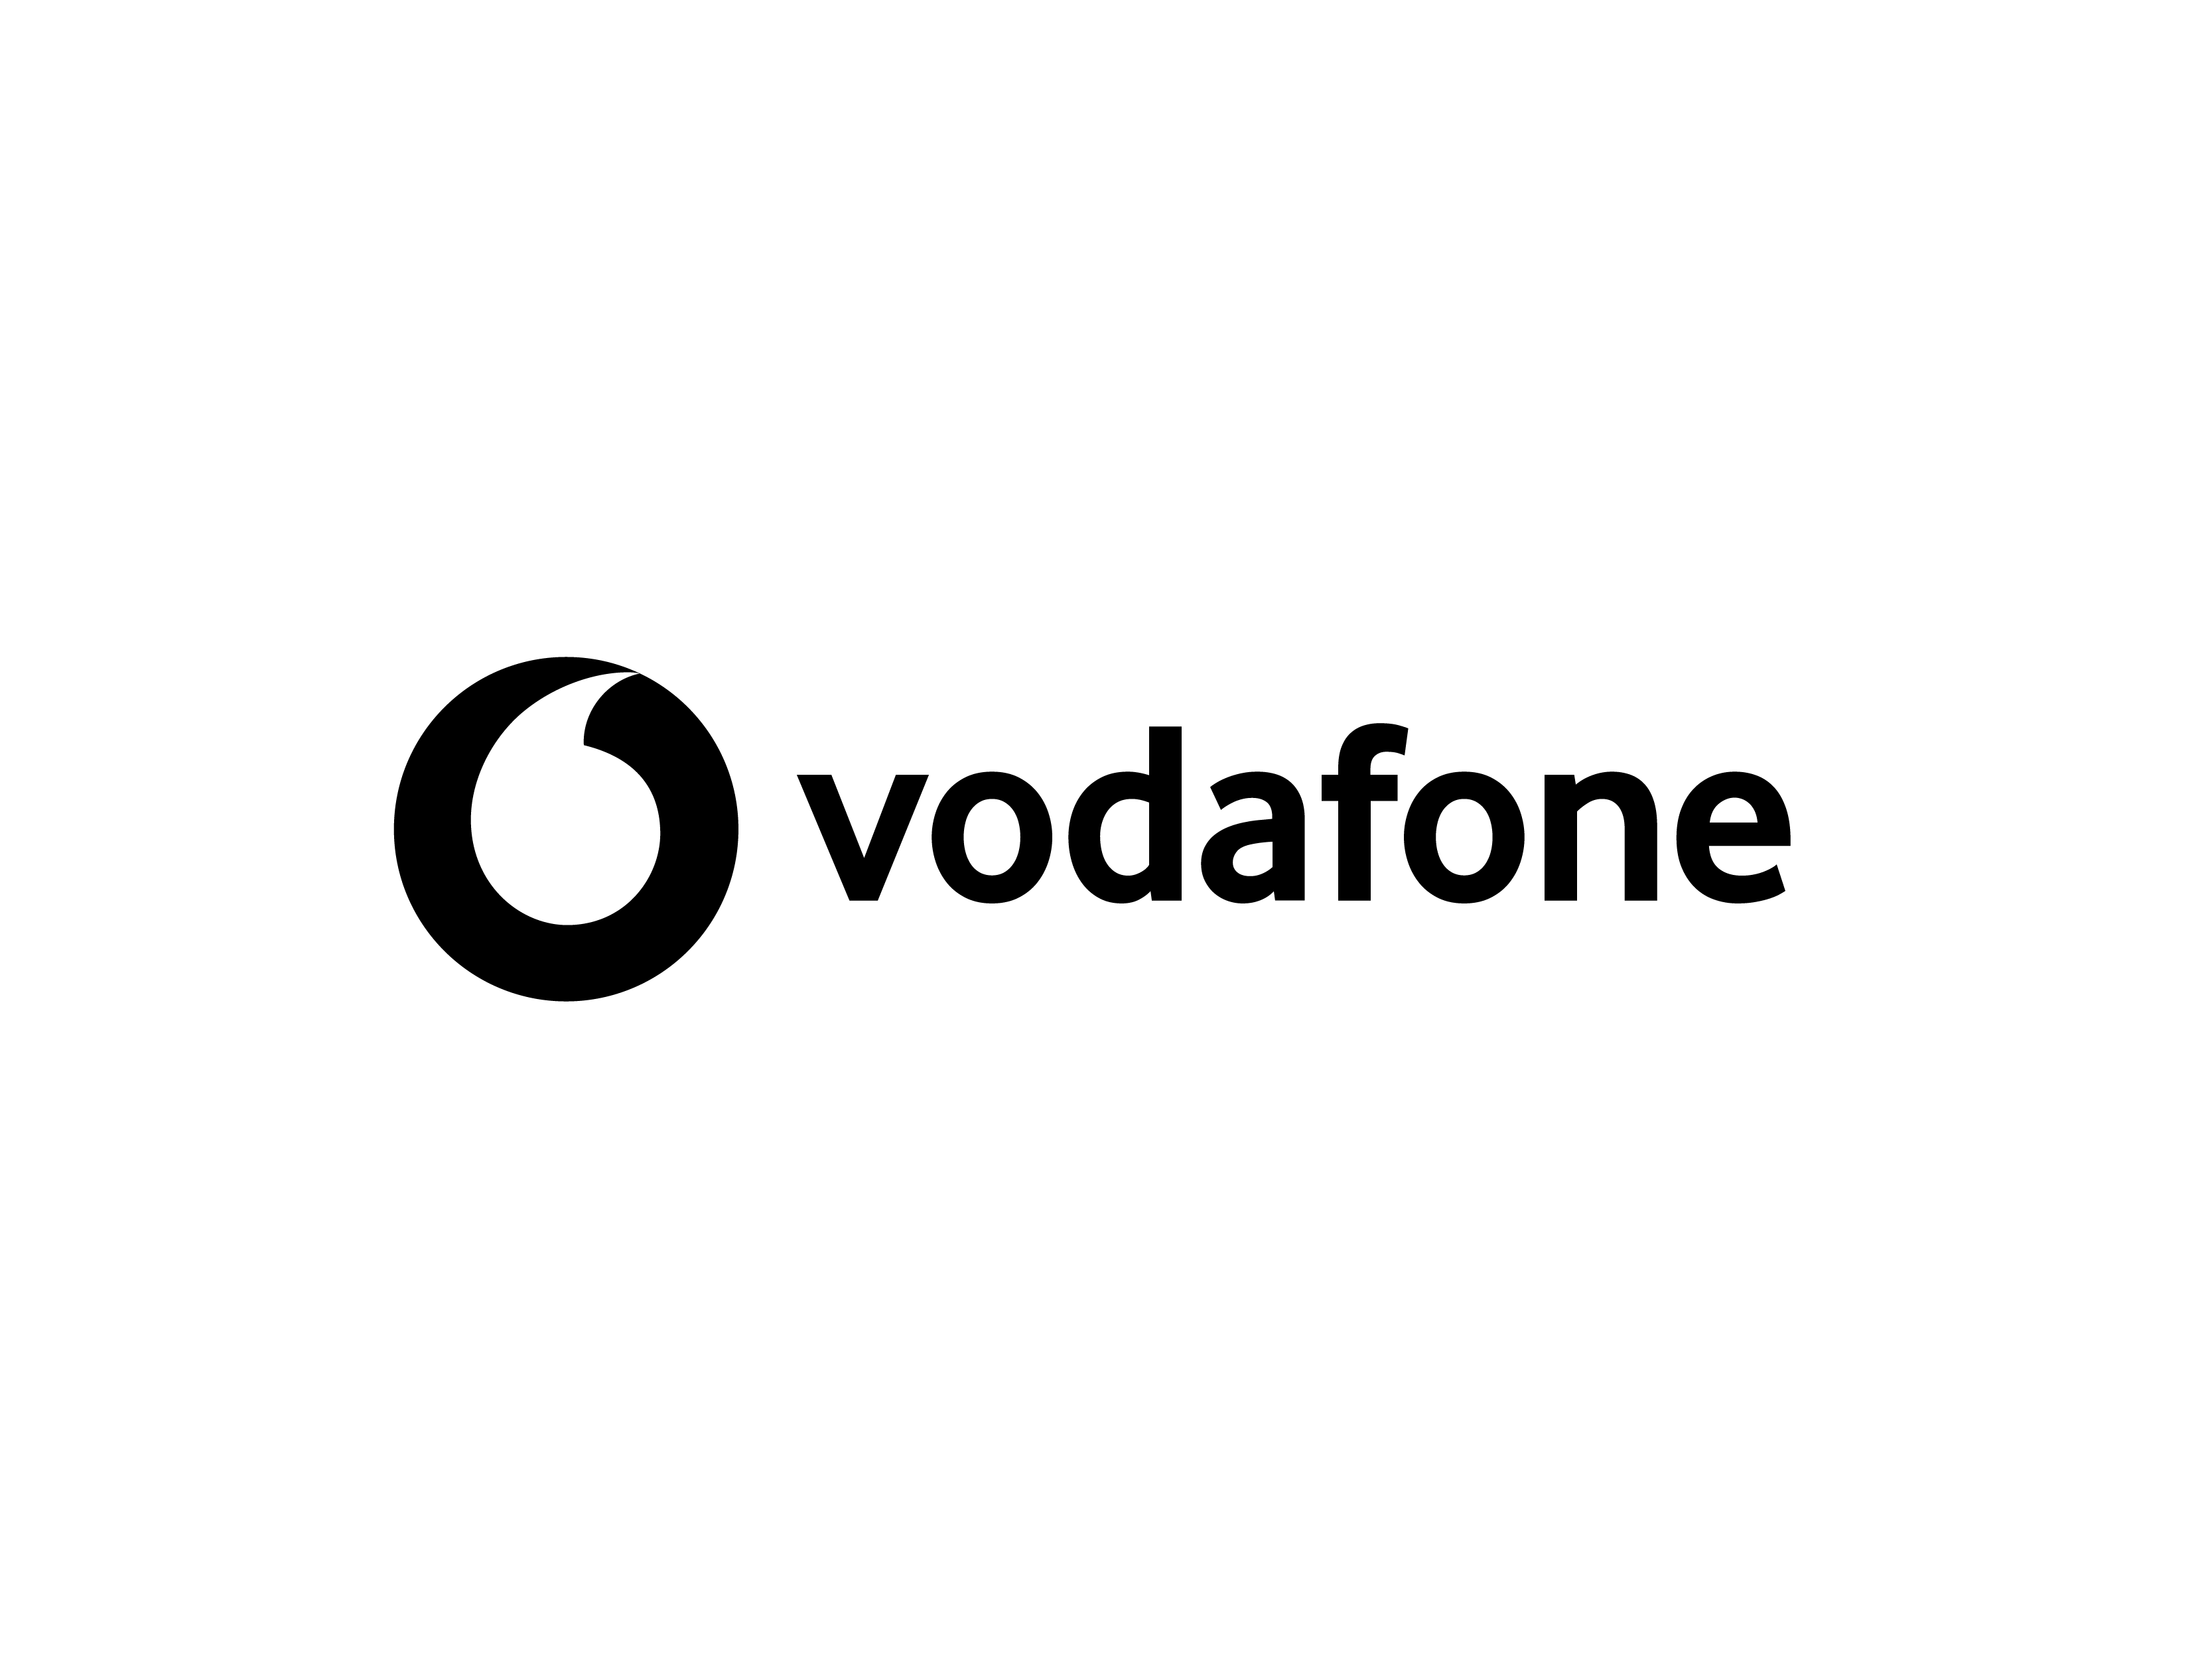 Vodafone (Homepage)